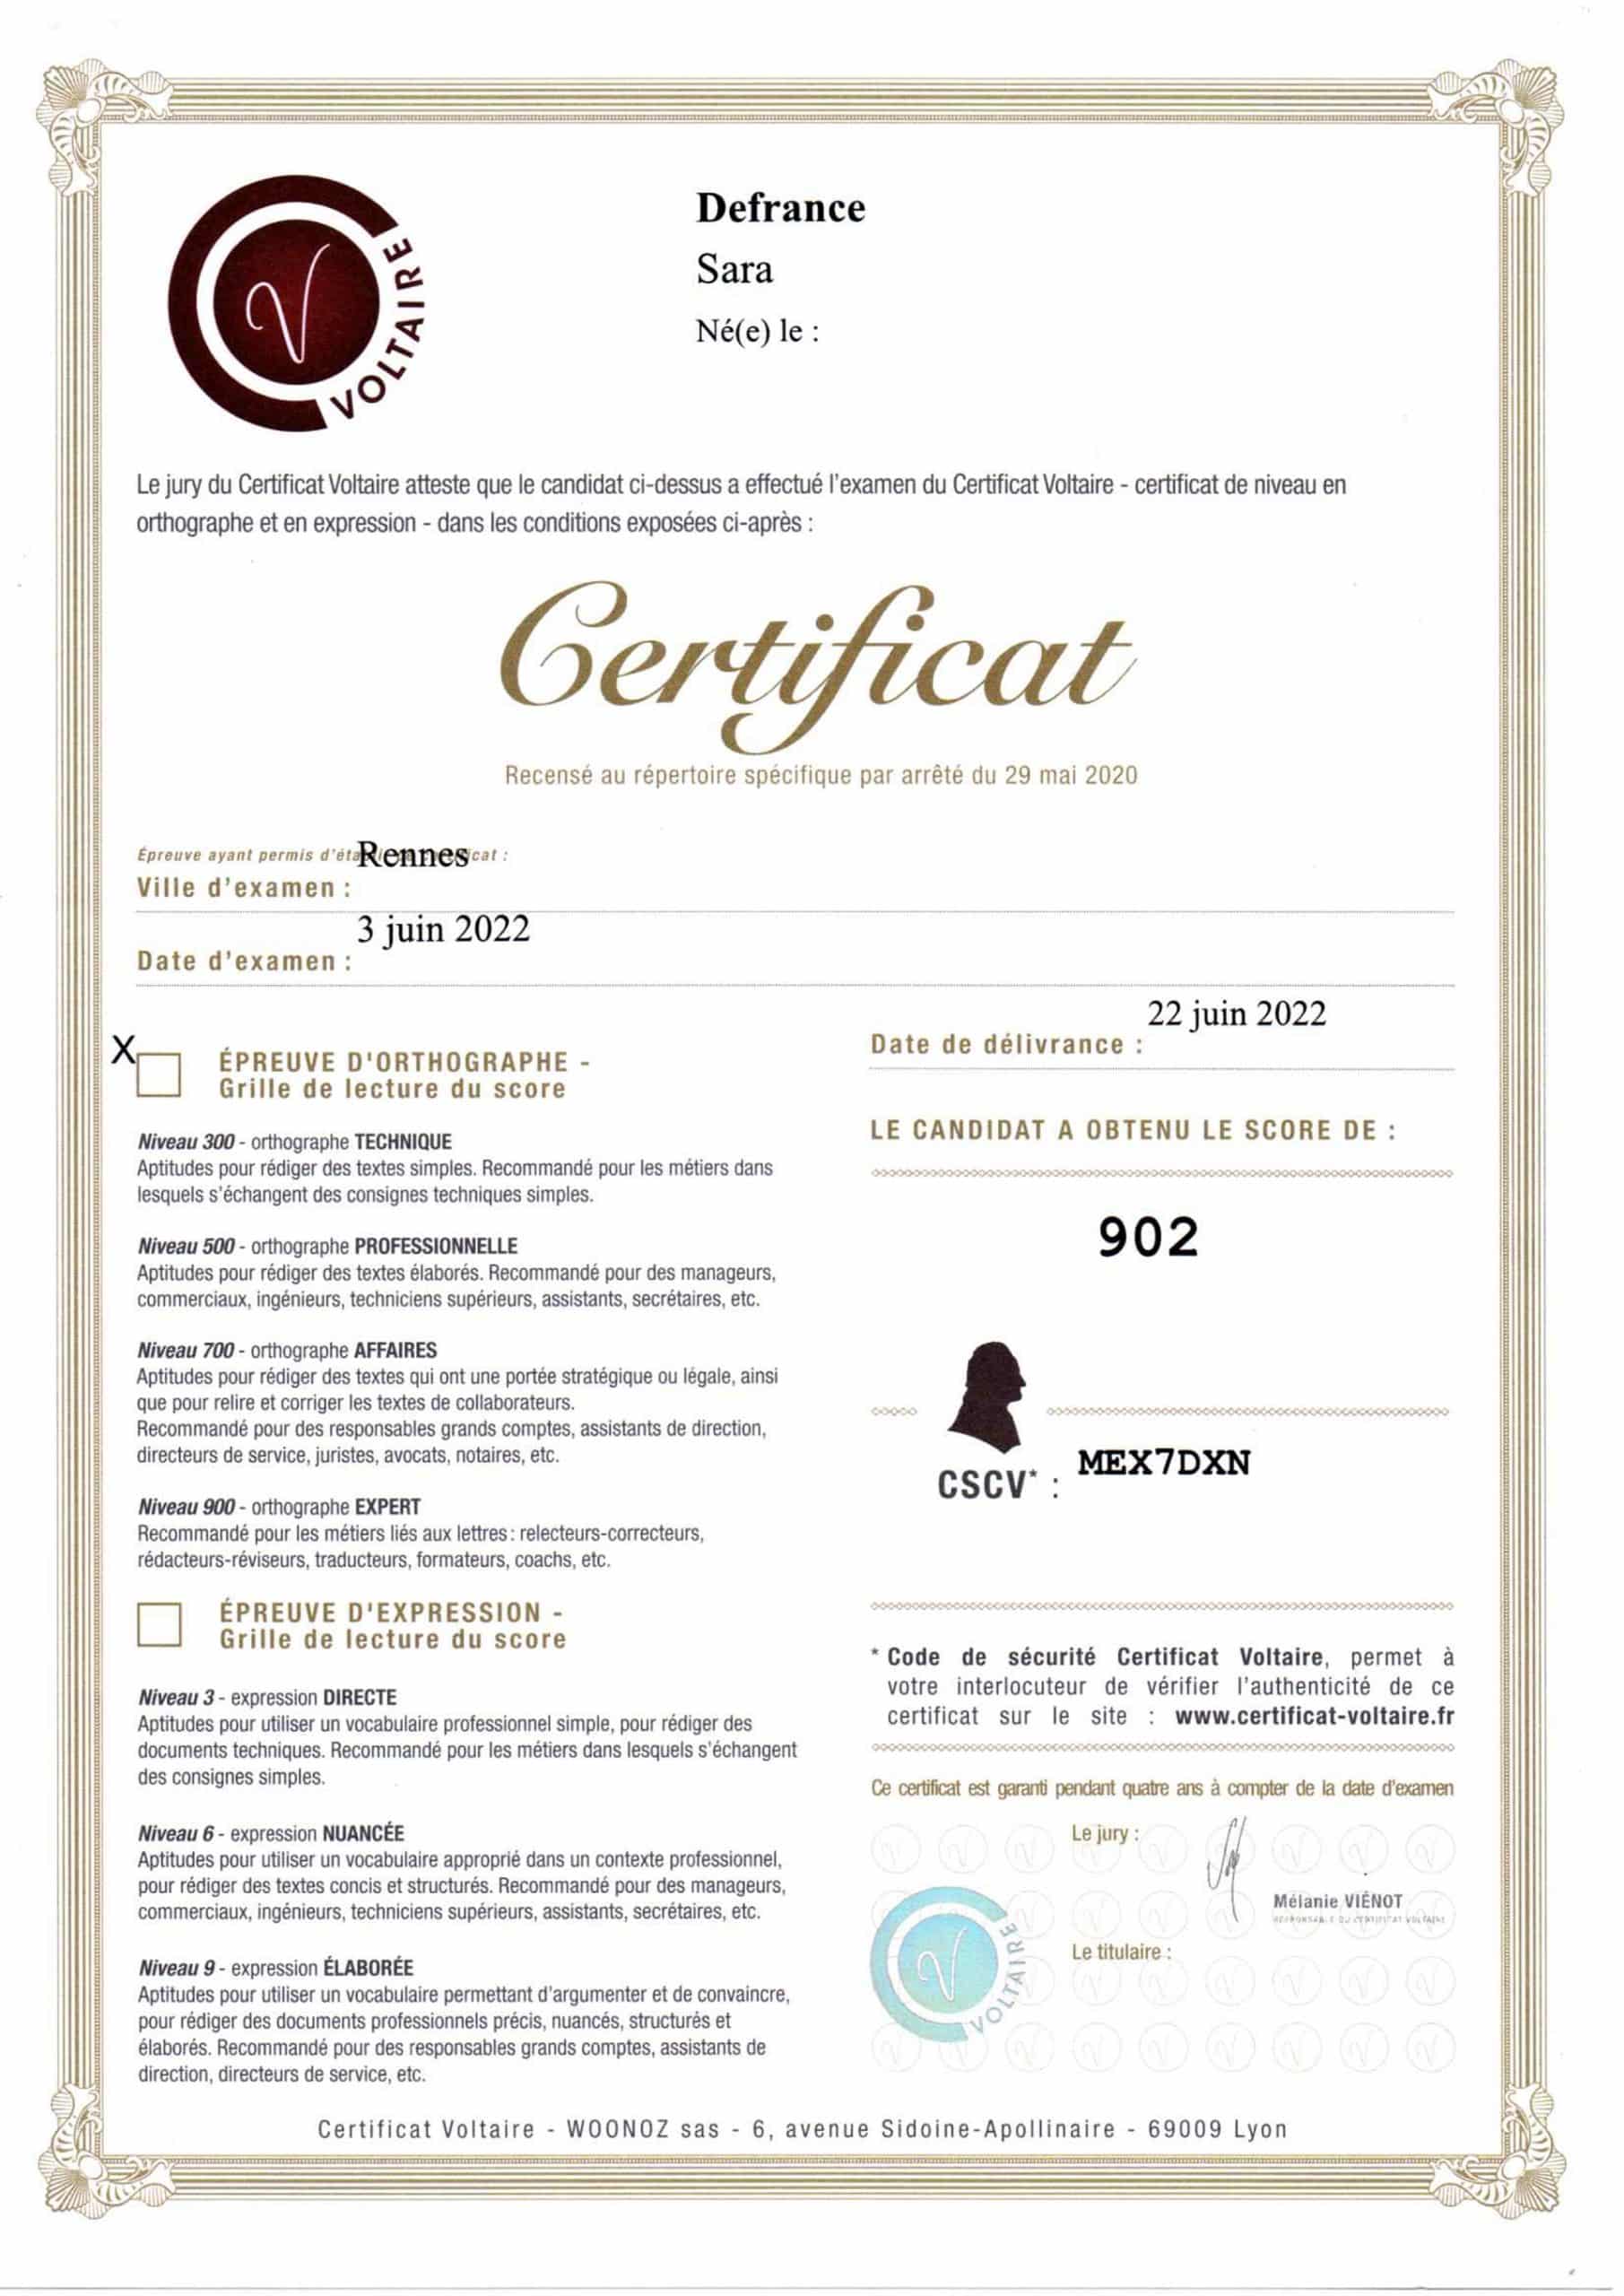 Certificat Voltaire Sara Defrance Correctrice